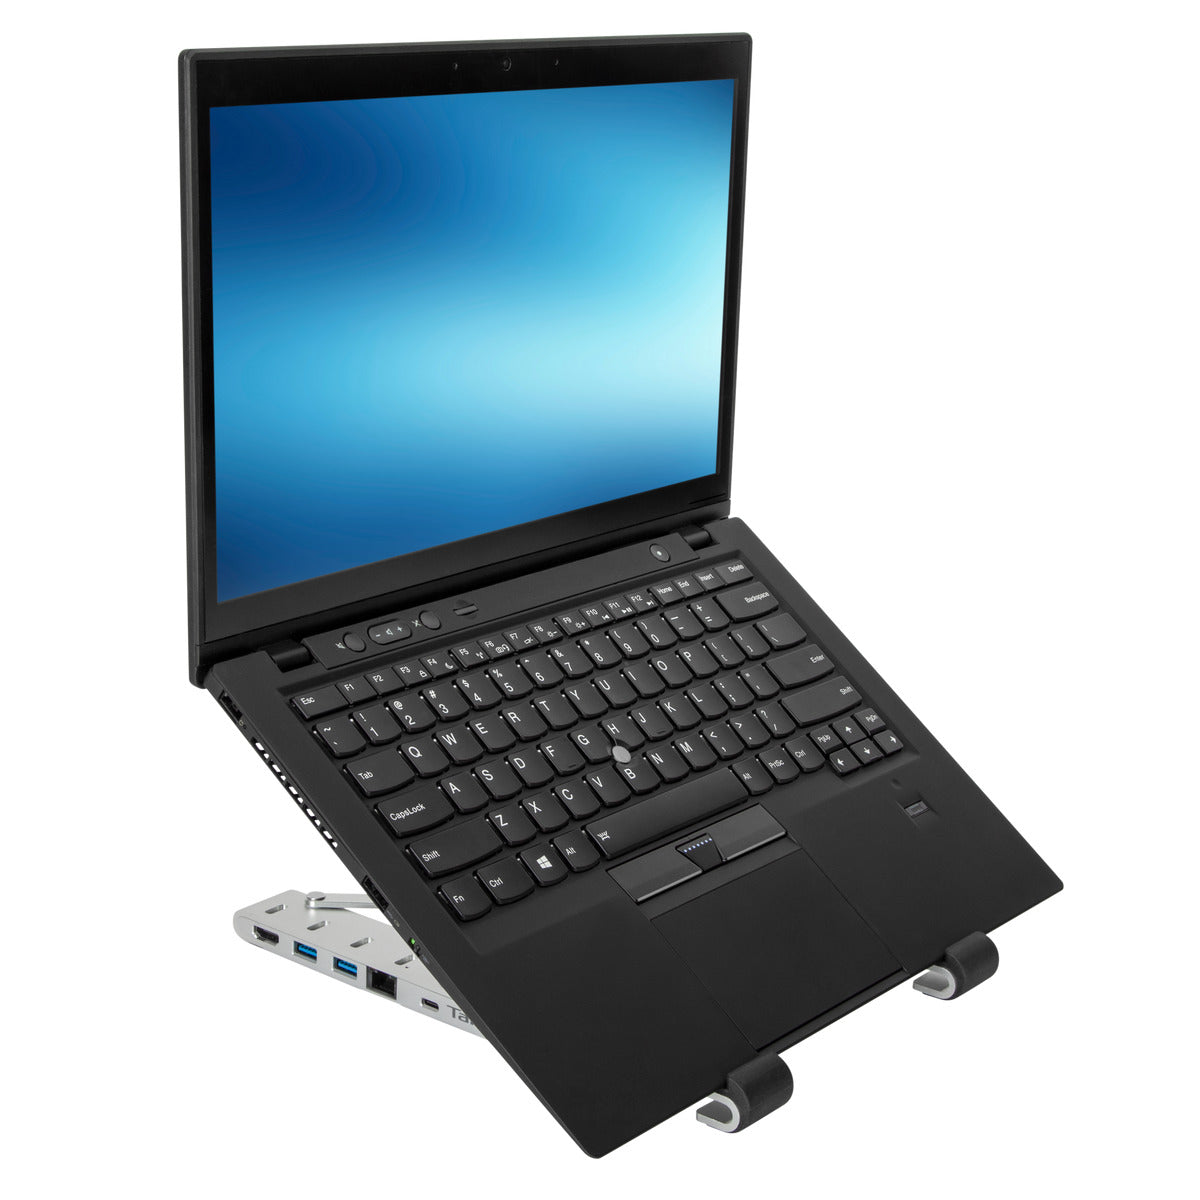 Targus AWU100005 Portable Ergonomic Laptop Stand 手提電腦支架 + 集線器